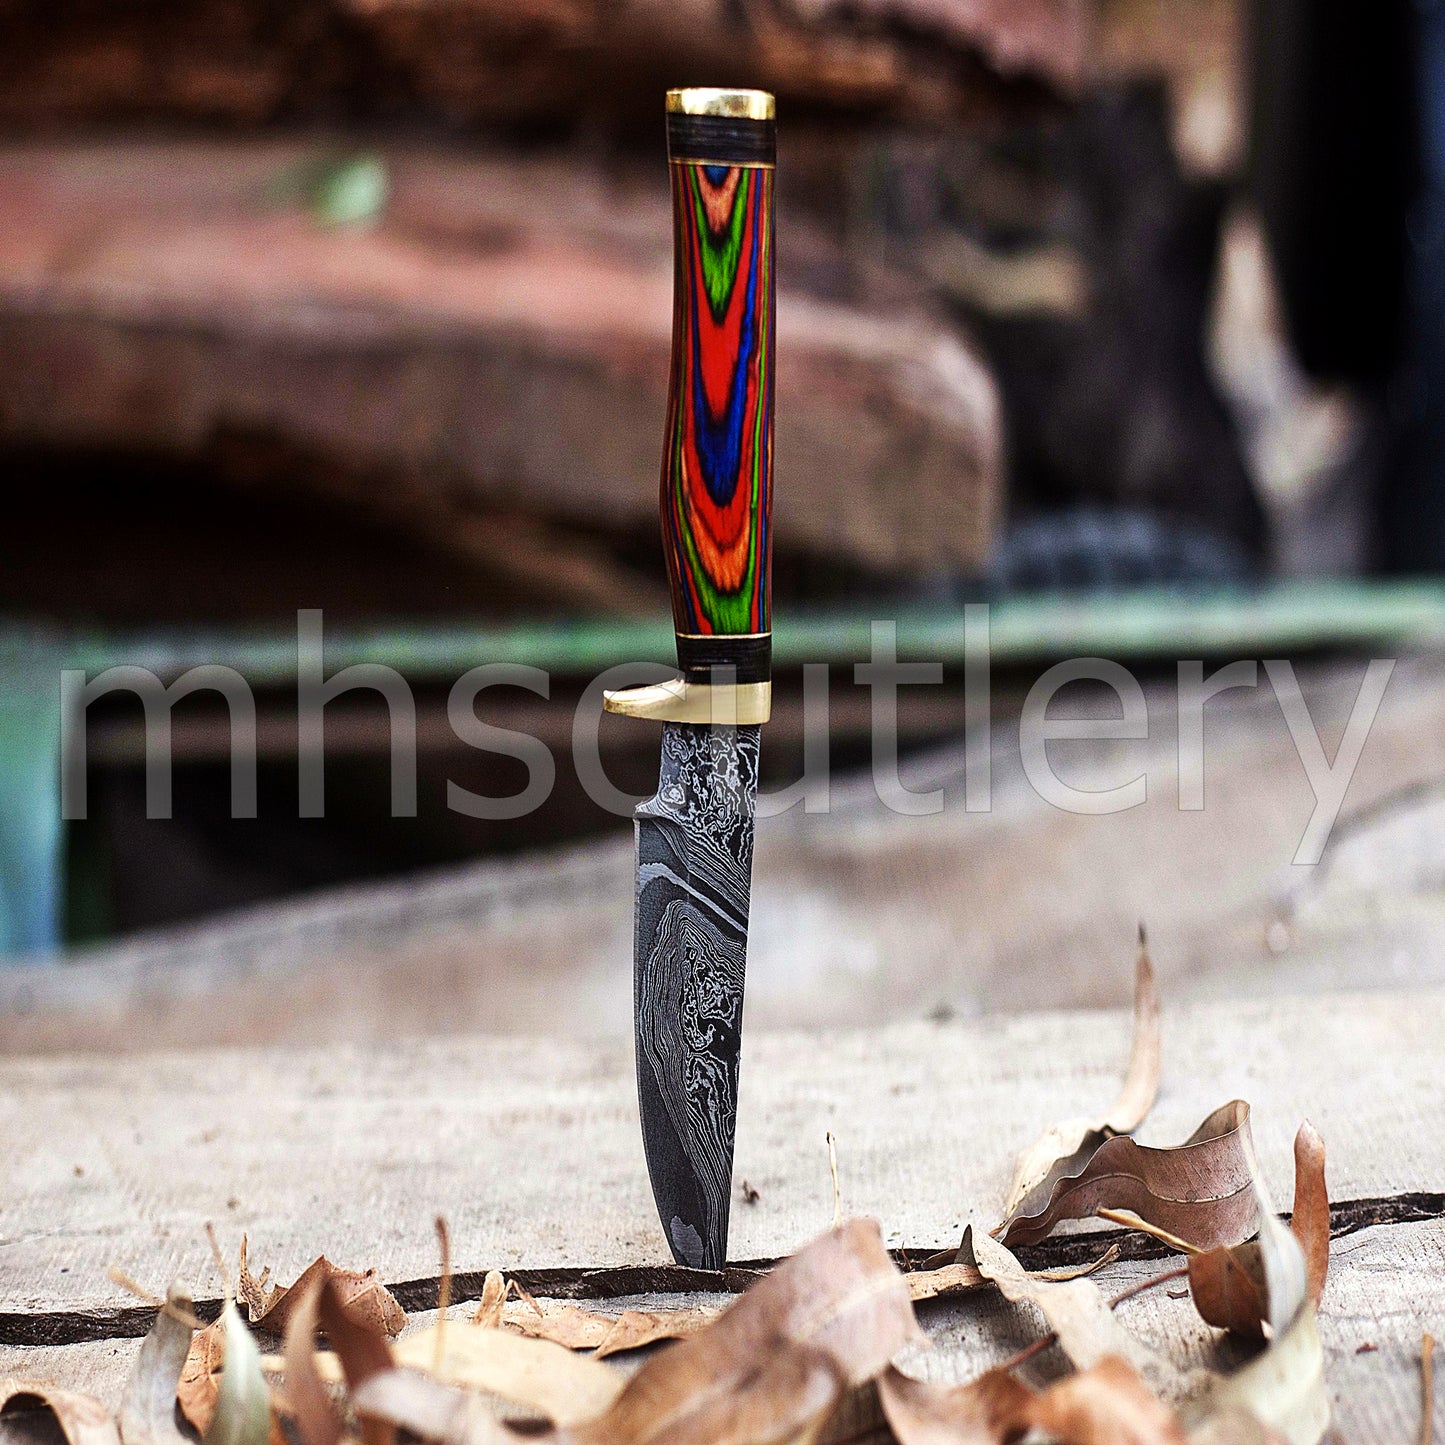 Custom Handmade Damascus Steel Skinner Knife With Rainbow Handle | mhscutlery